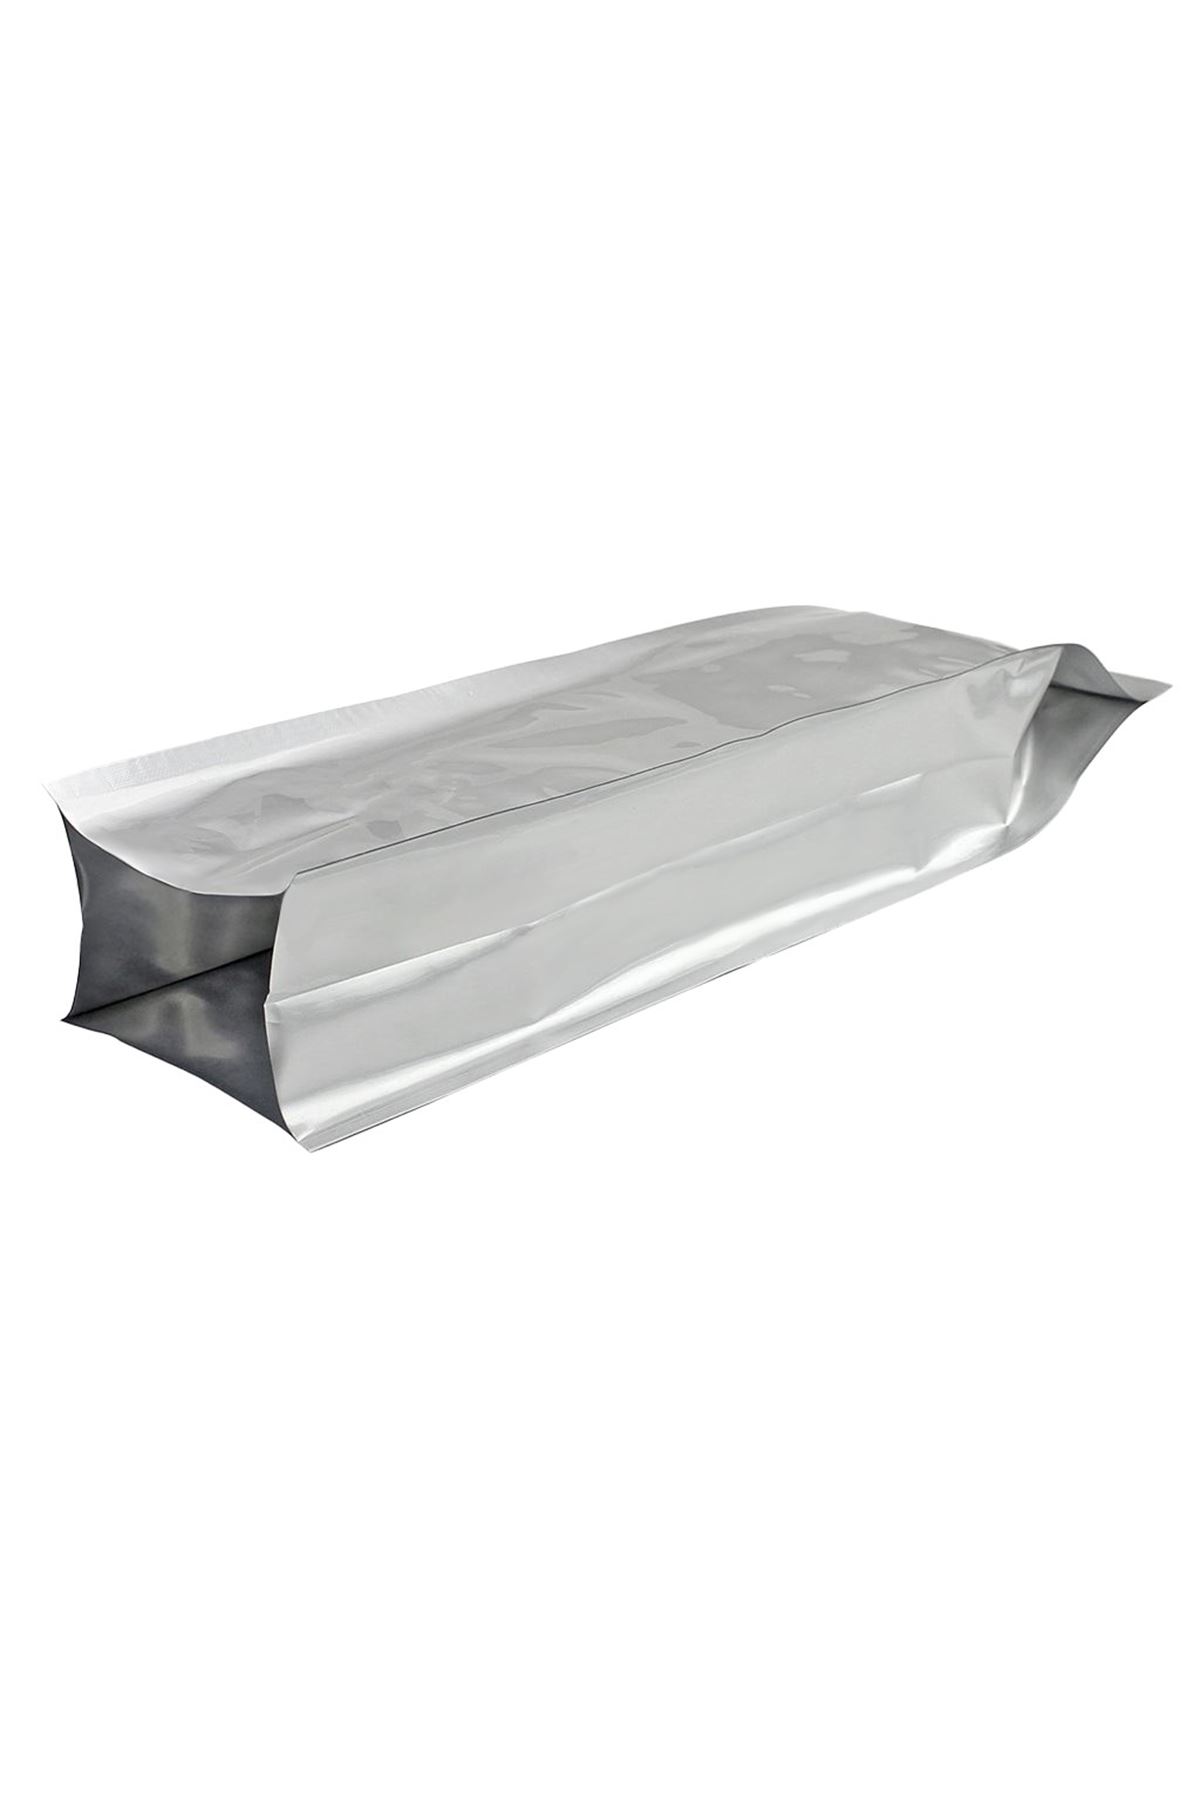 Packtory 12,5 x 40 + 4 Cm  Aluminyum Yan Körüklü Quadro Ambalaj 1000 Gr. 250 Adet